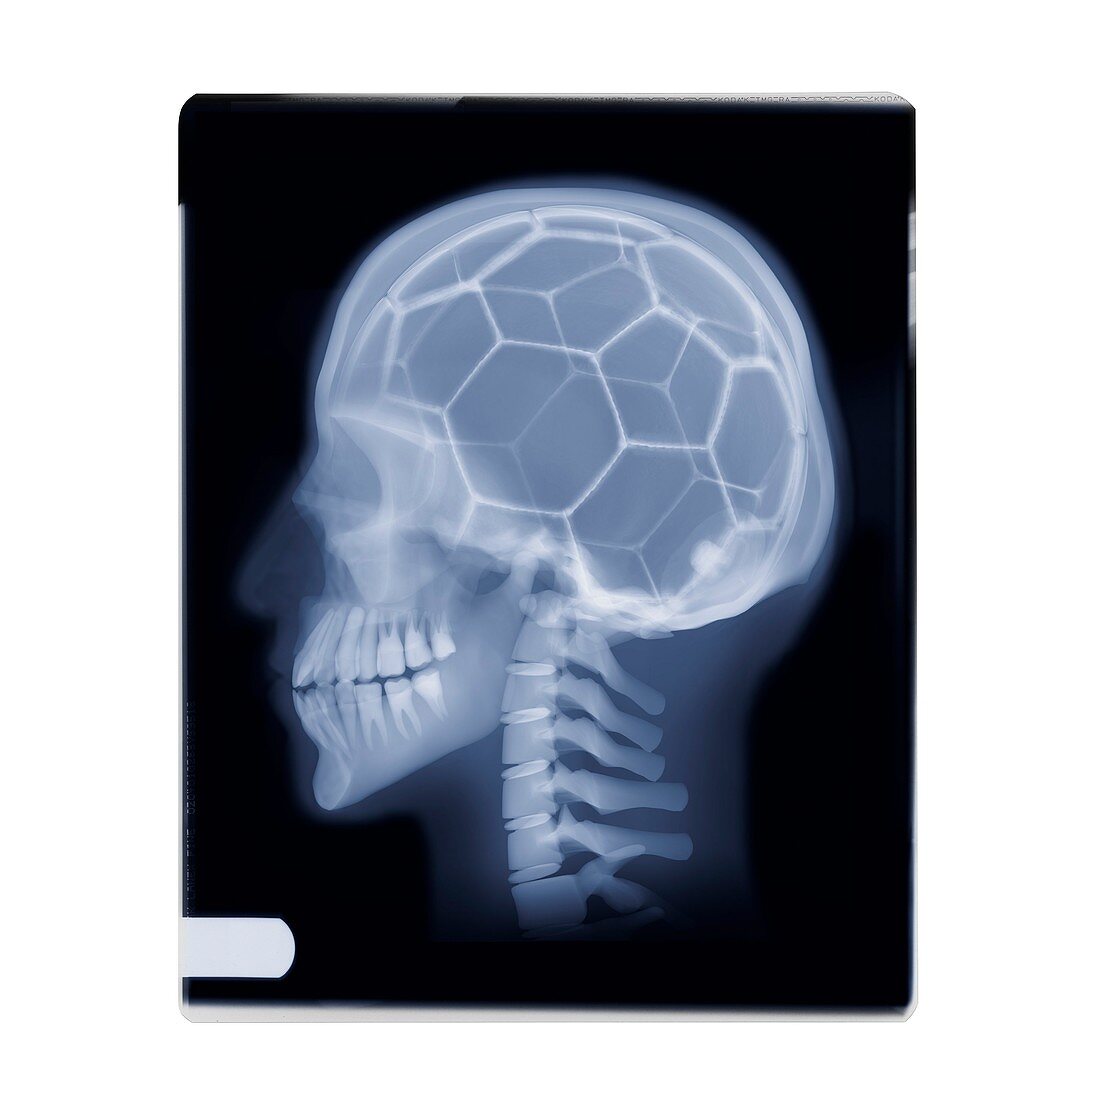 Football on the brain,X-ray image